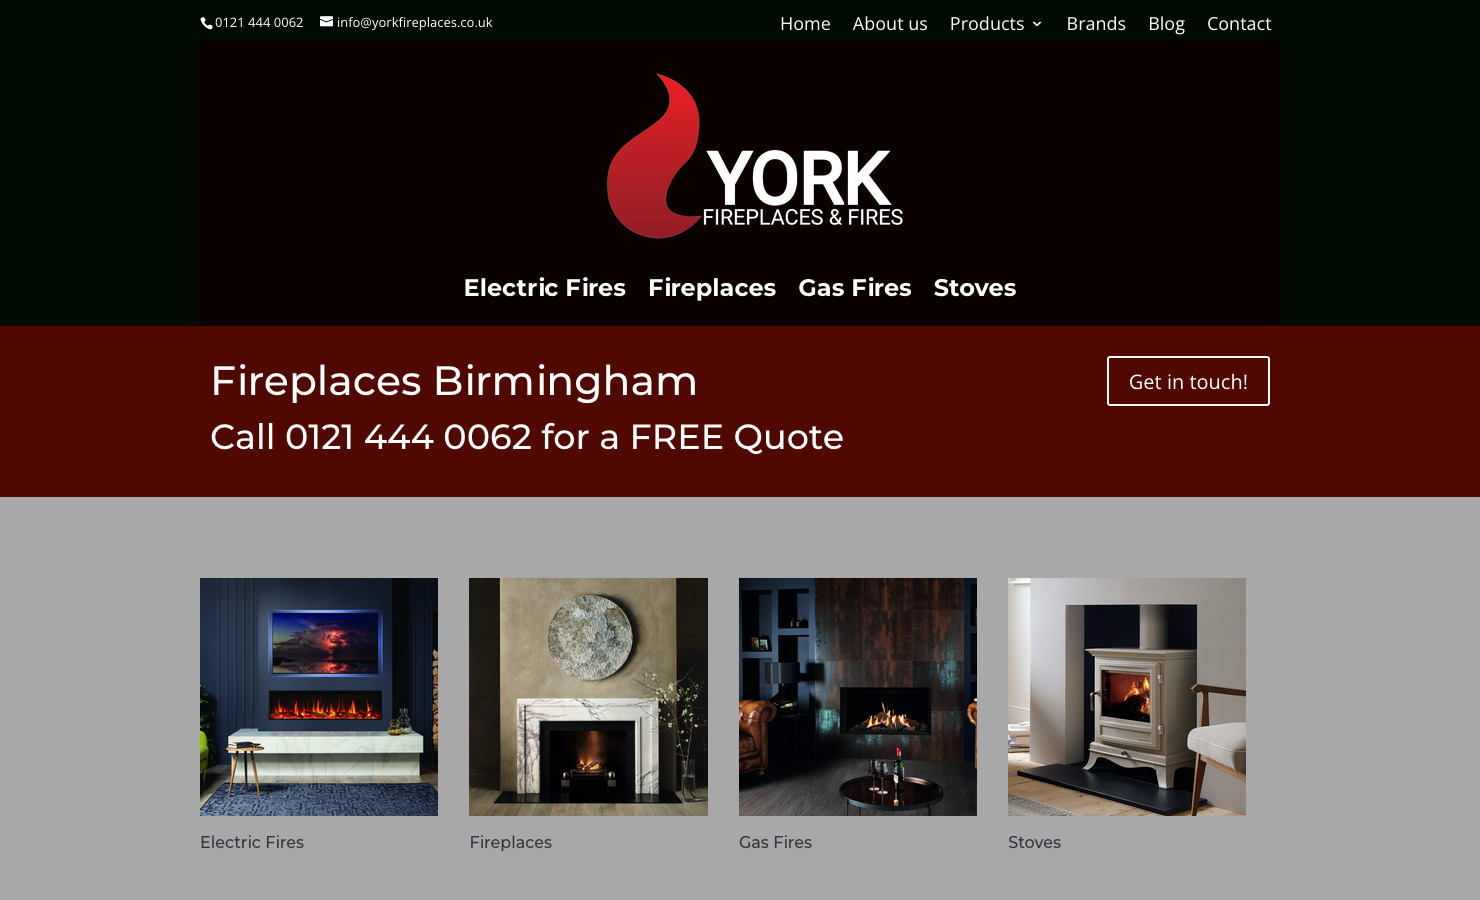 York Fireplaces